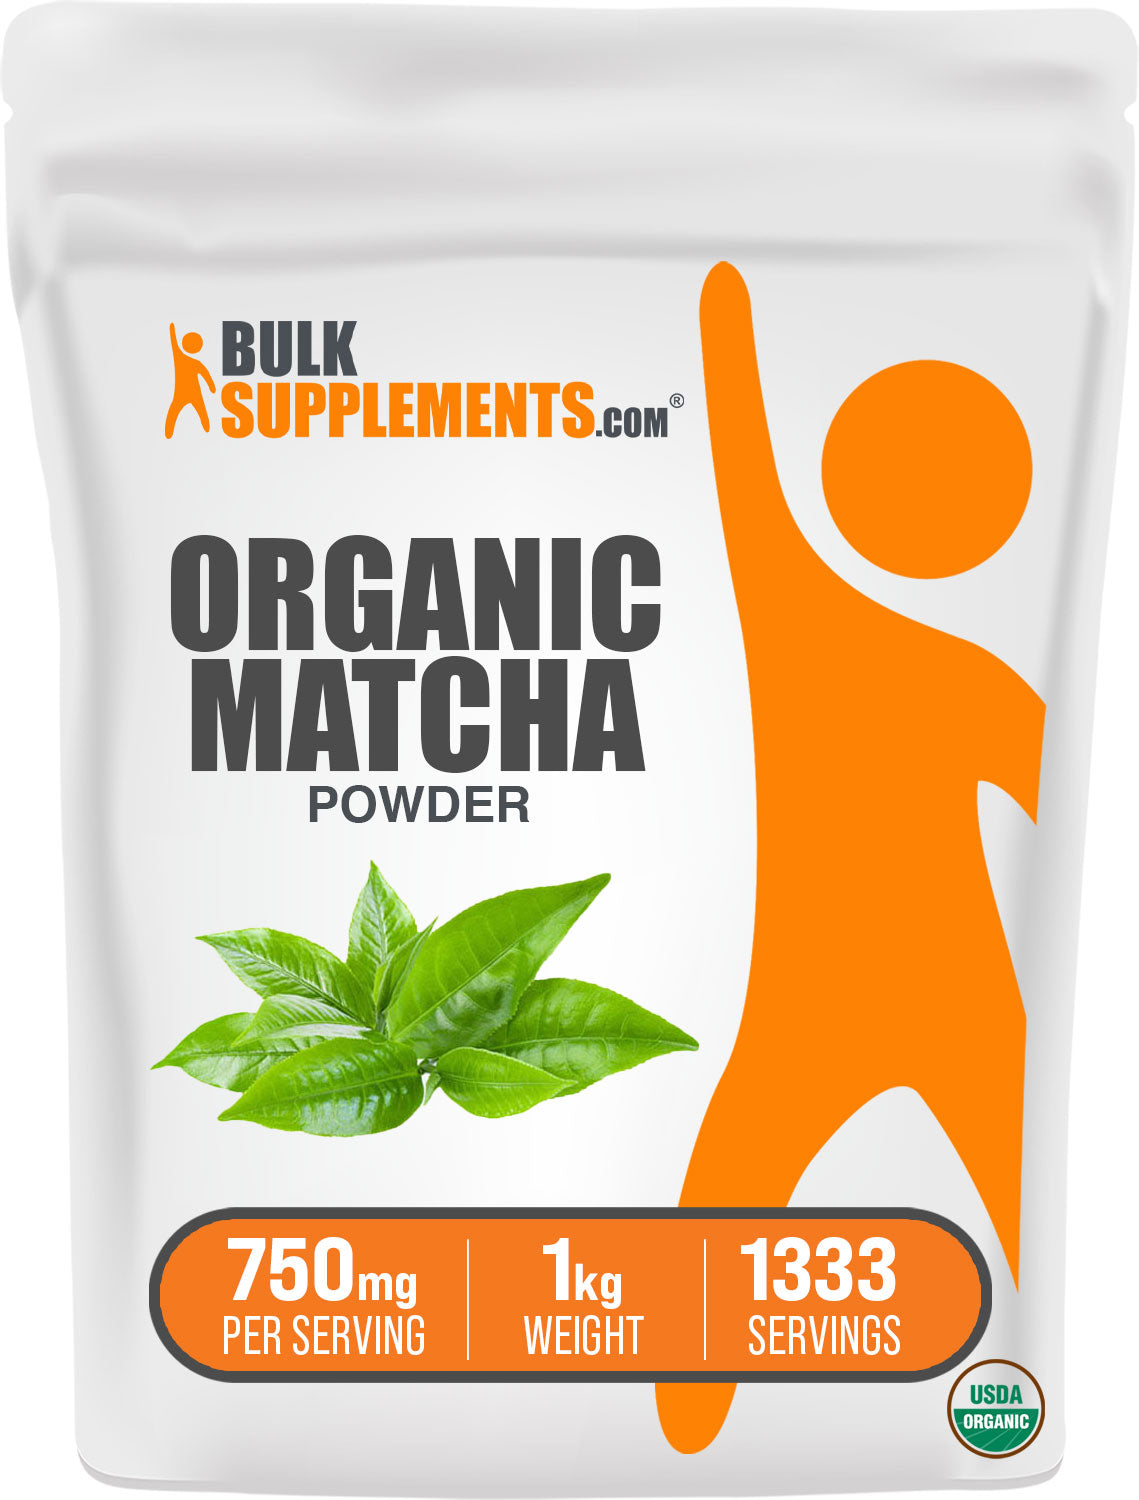 BulkSupplements Organic Matcha Powder 1kg Bag